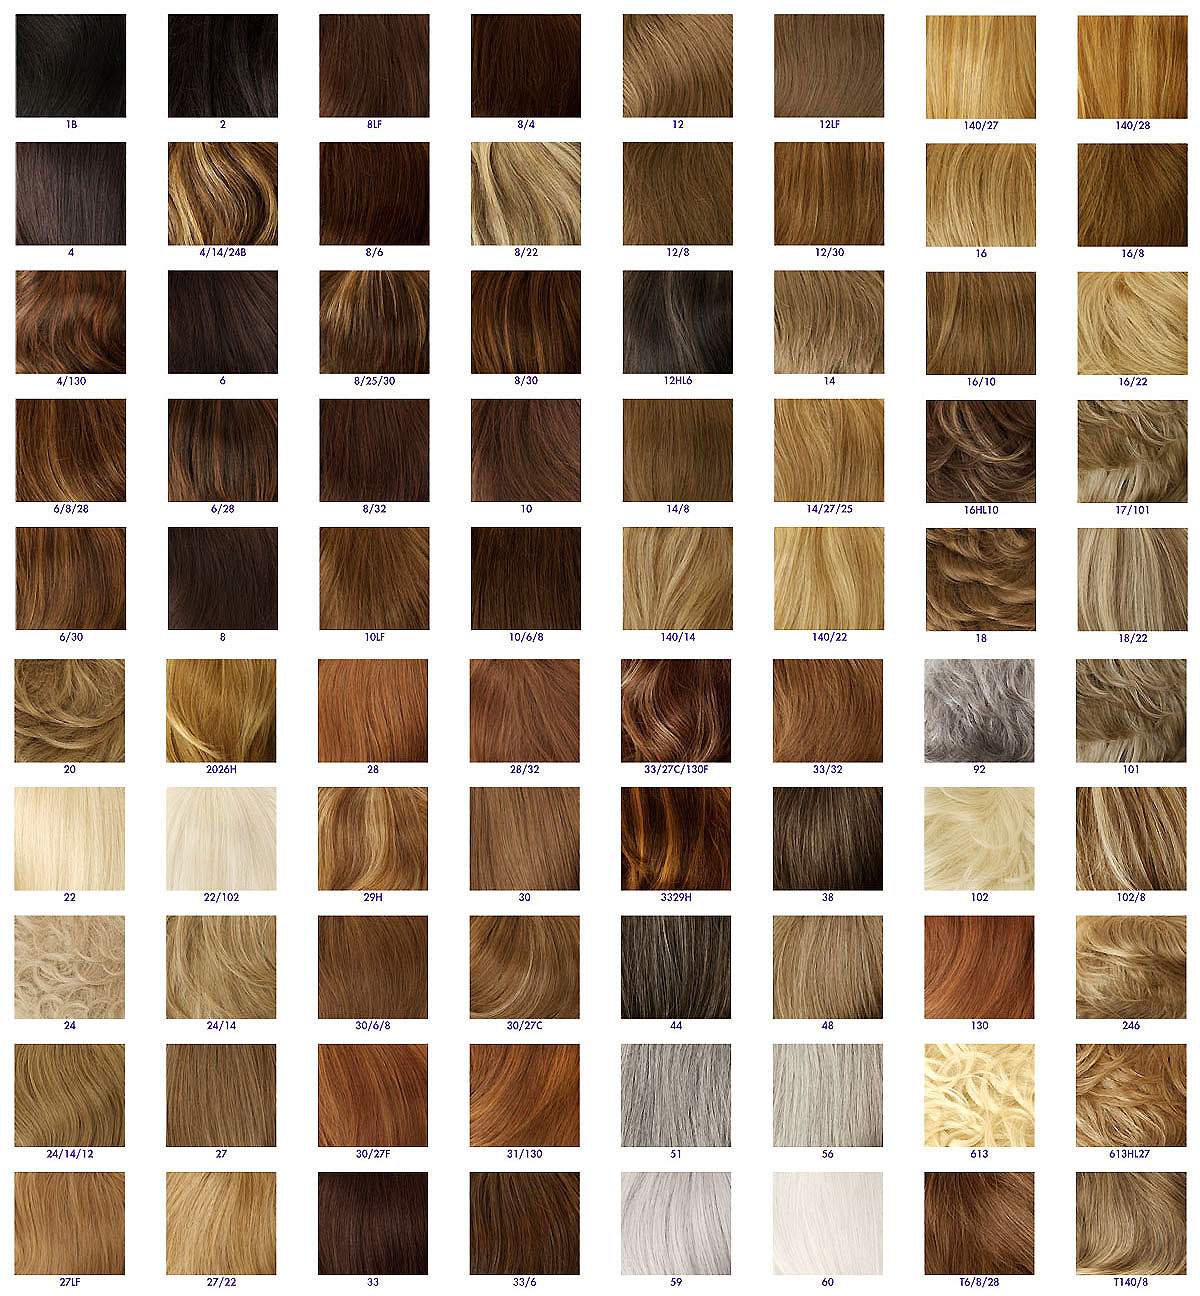 Human Hair colors